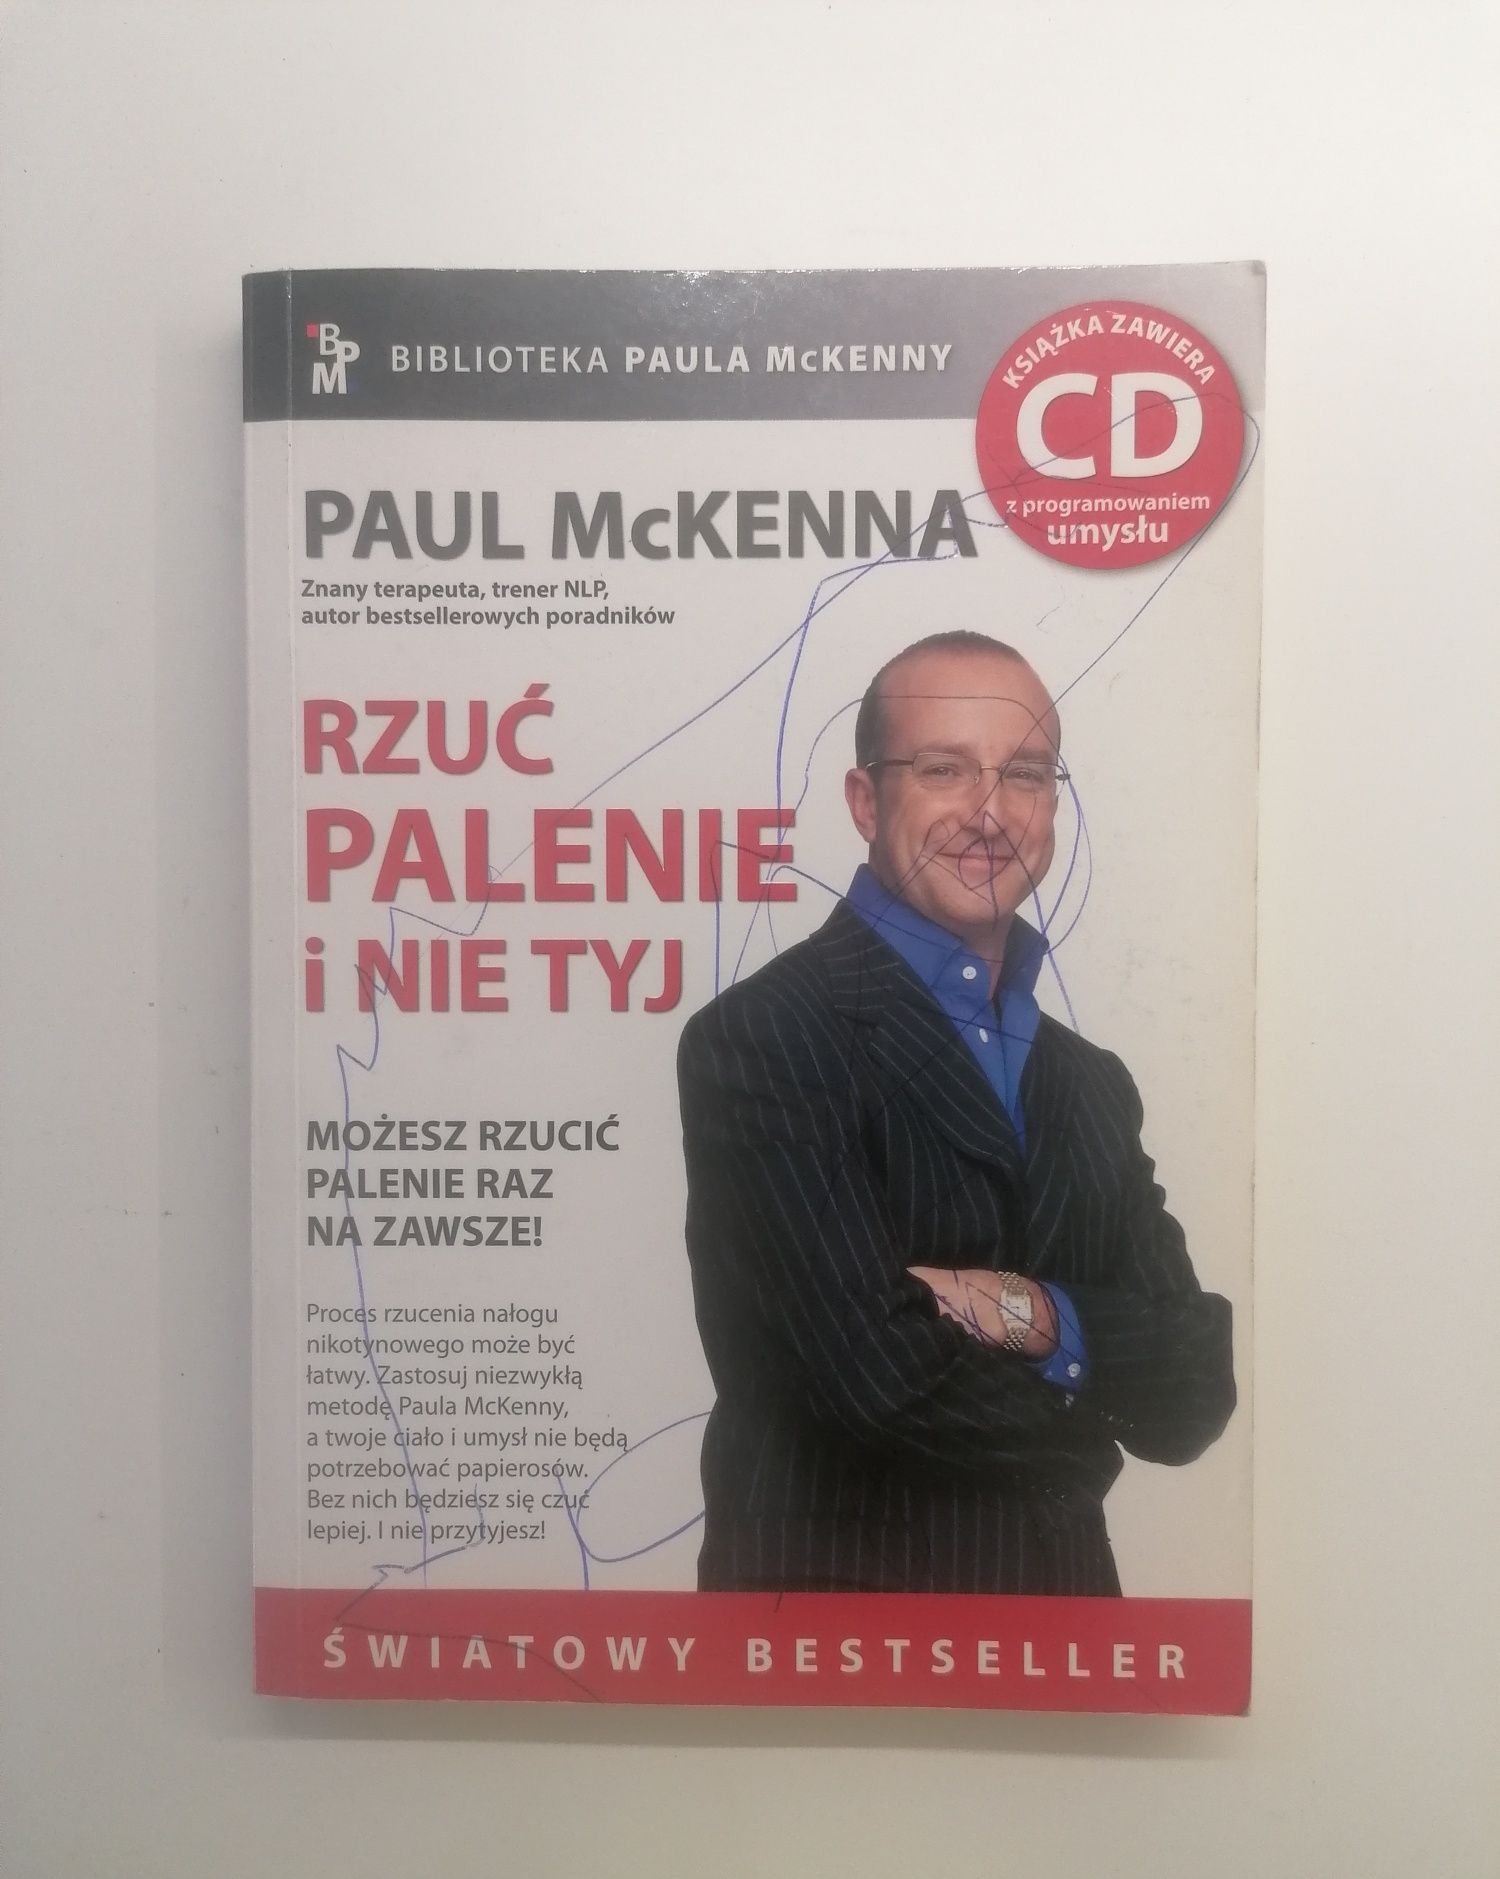 Bestseller Paul McKenna Rzuć palenie i nie tyj +CD